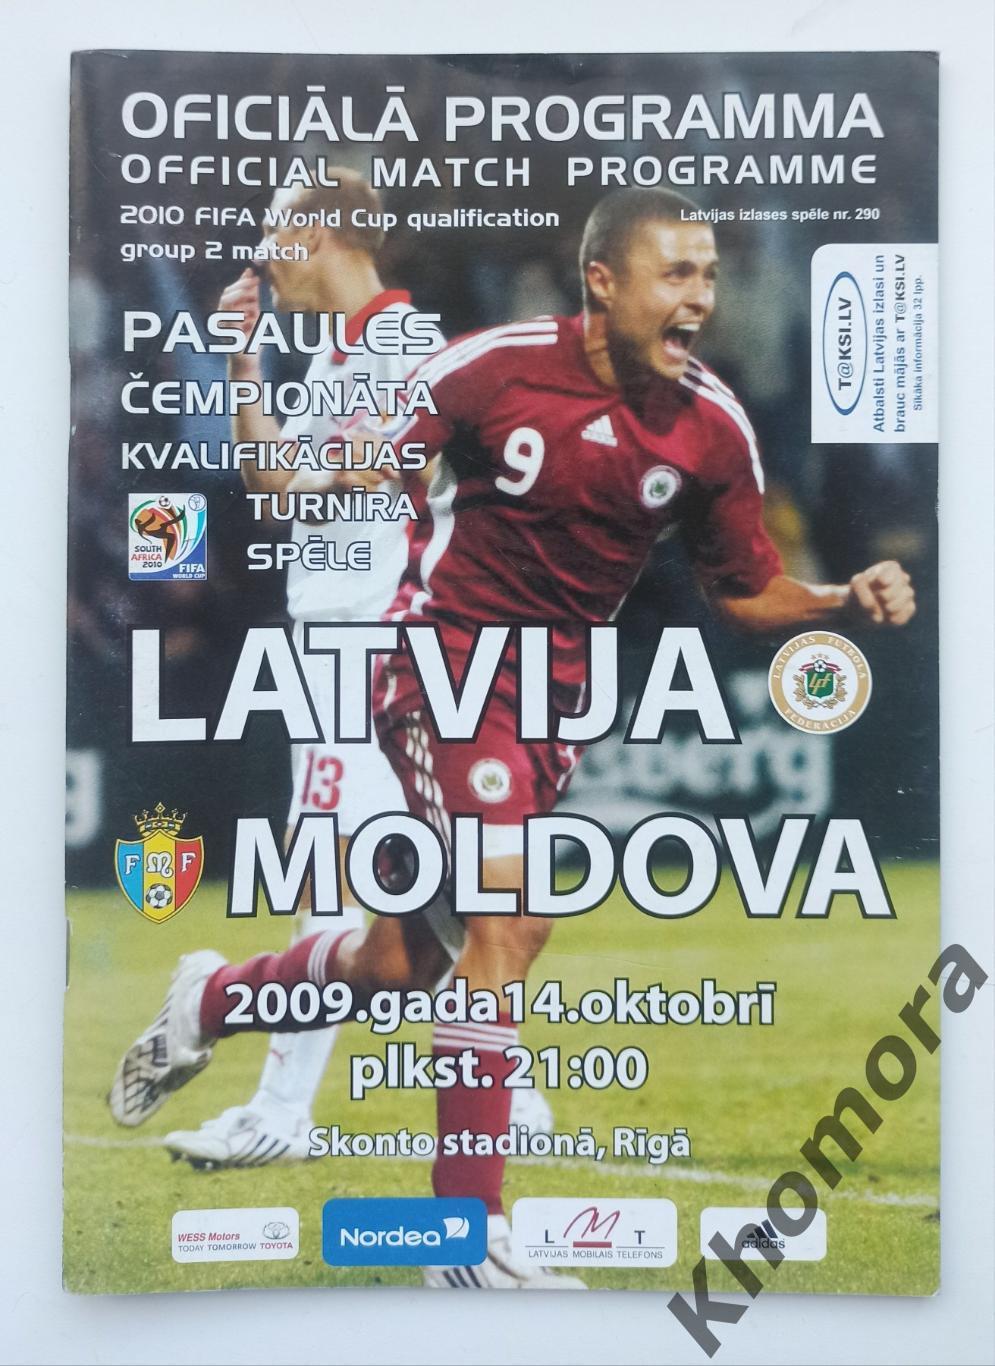 Латвия - Молдова 14.10.2009 - официальная программа